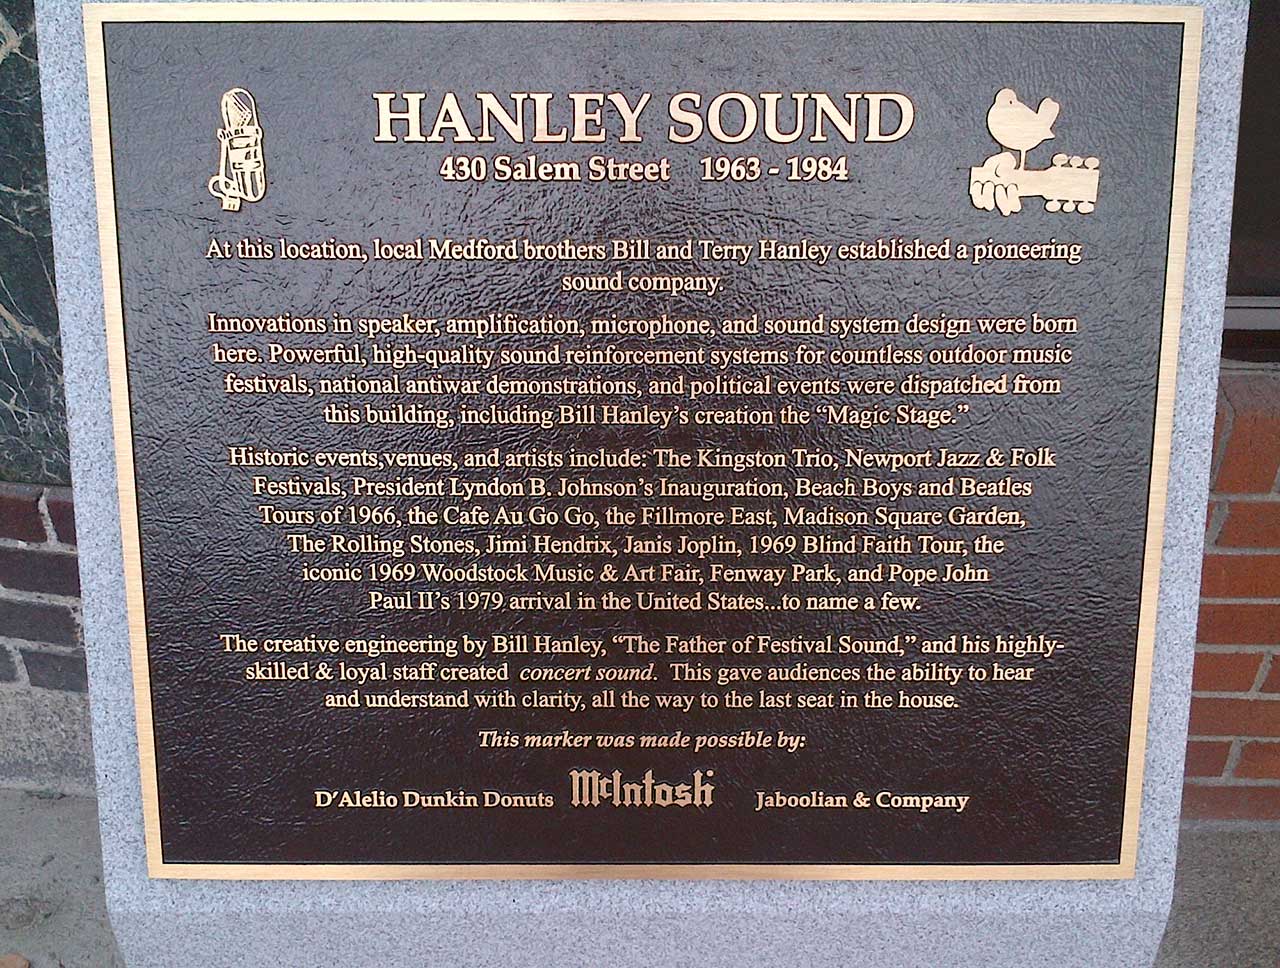 Hanley Sound Memorial Plaque sponsored by McIntosh